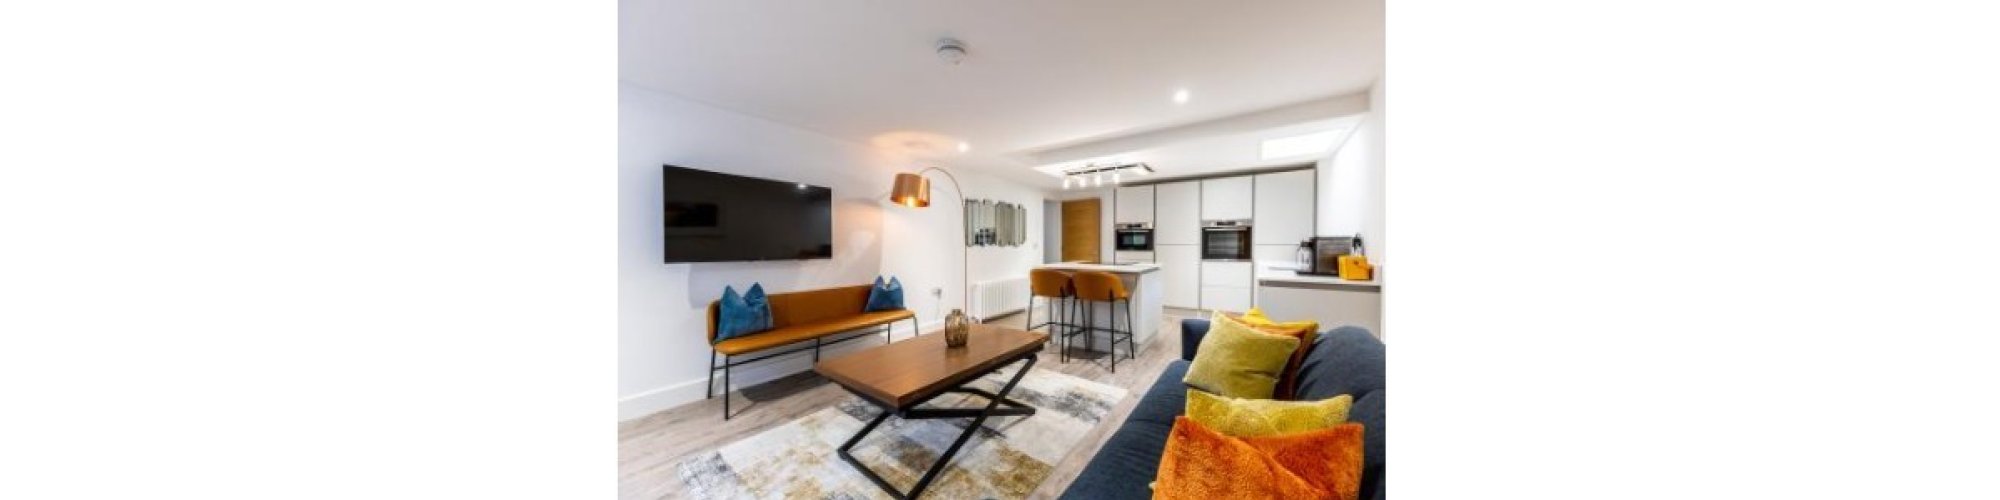 RÌGH Luxury Apartments - William Street